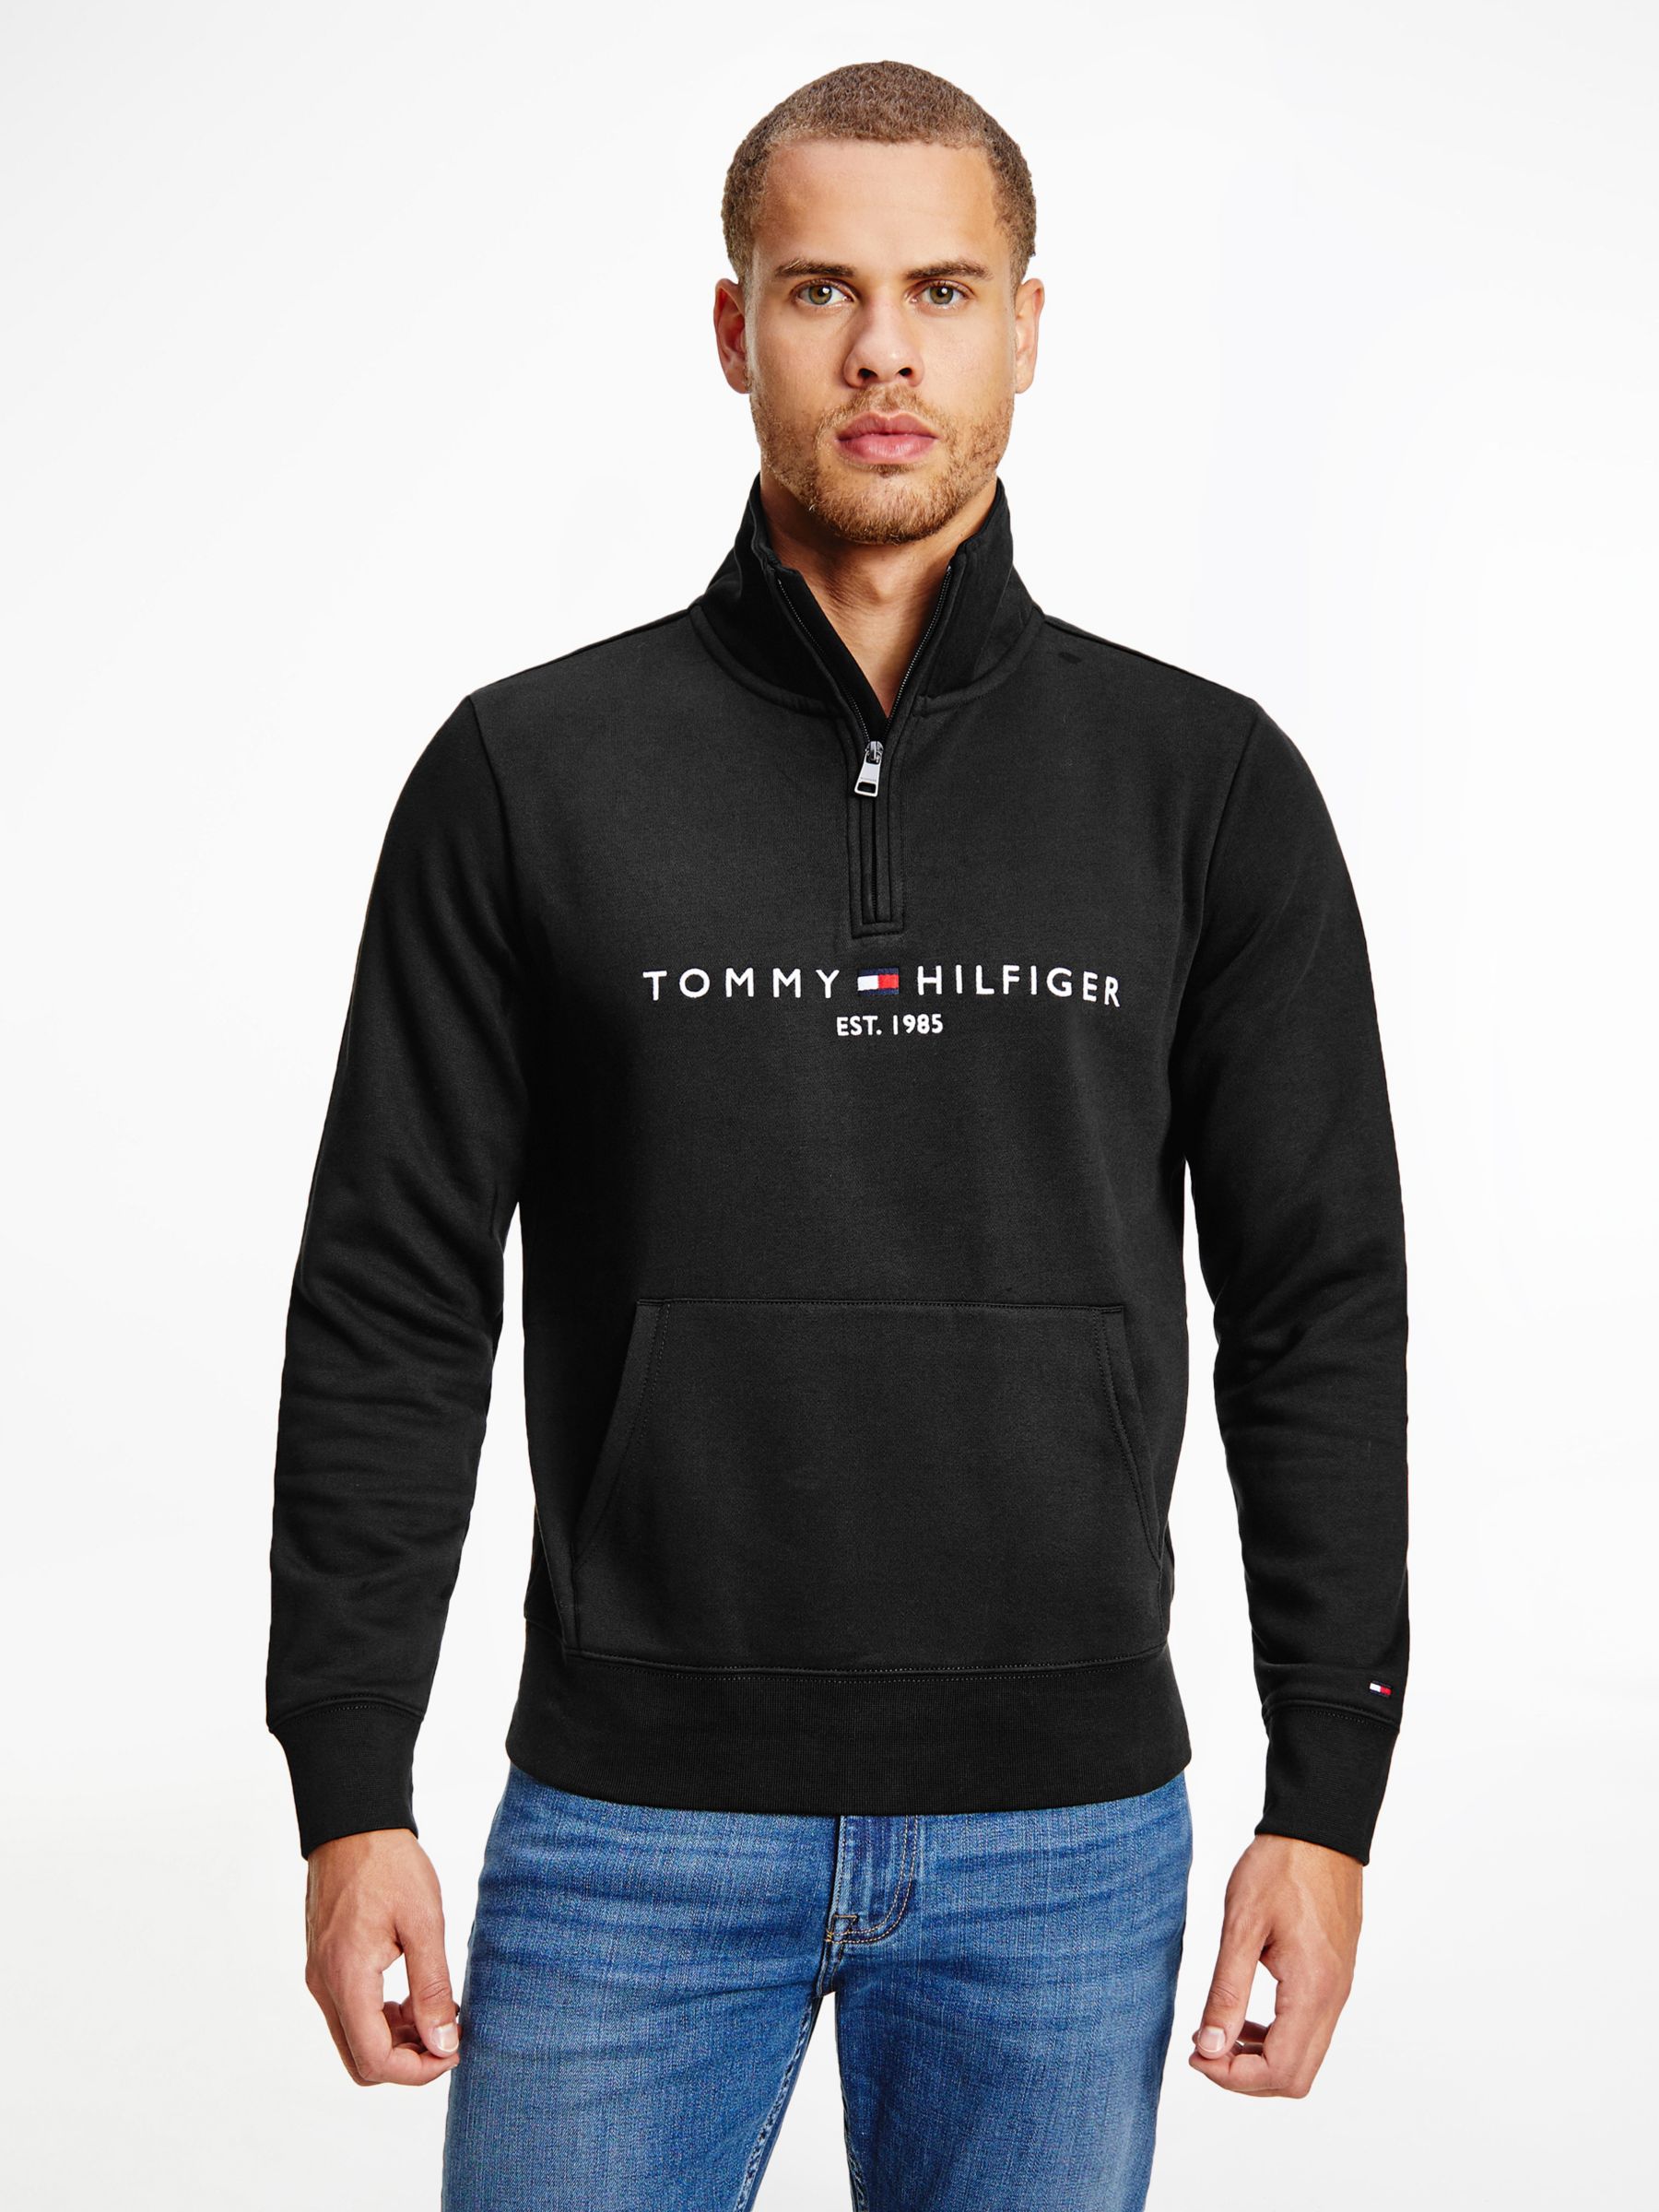 Tommy Hilfiger Mock Neck Sweatshirt, Black, XS